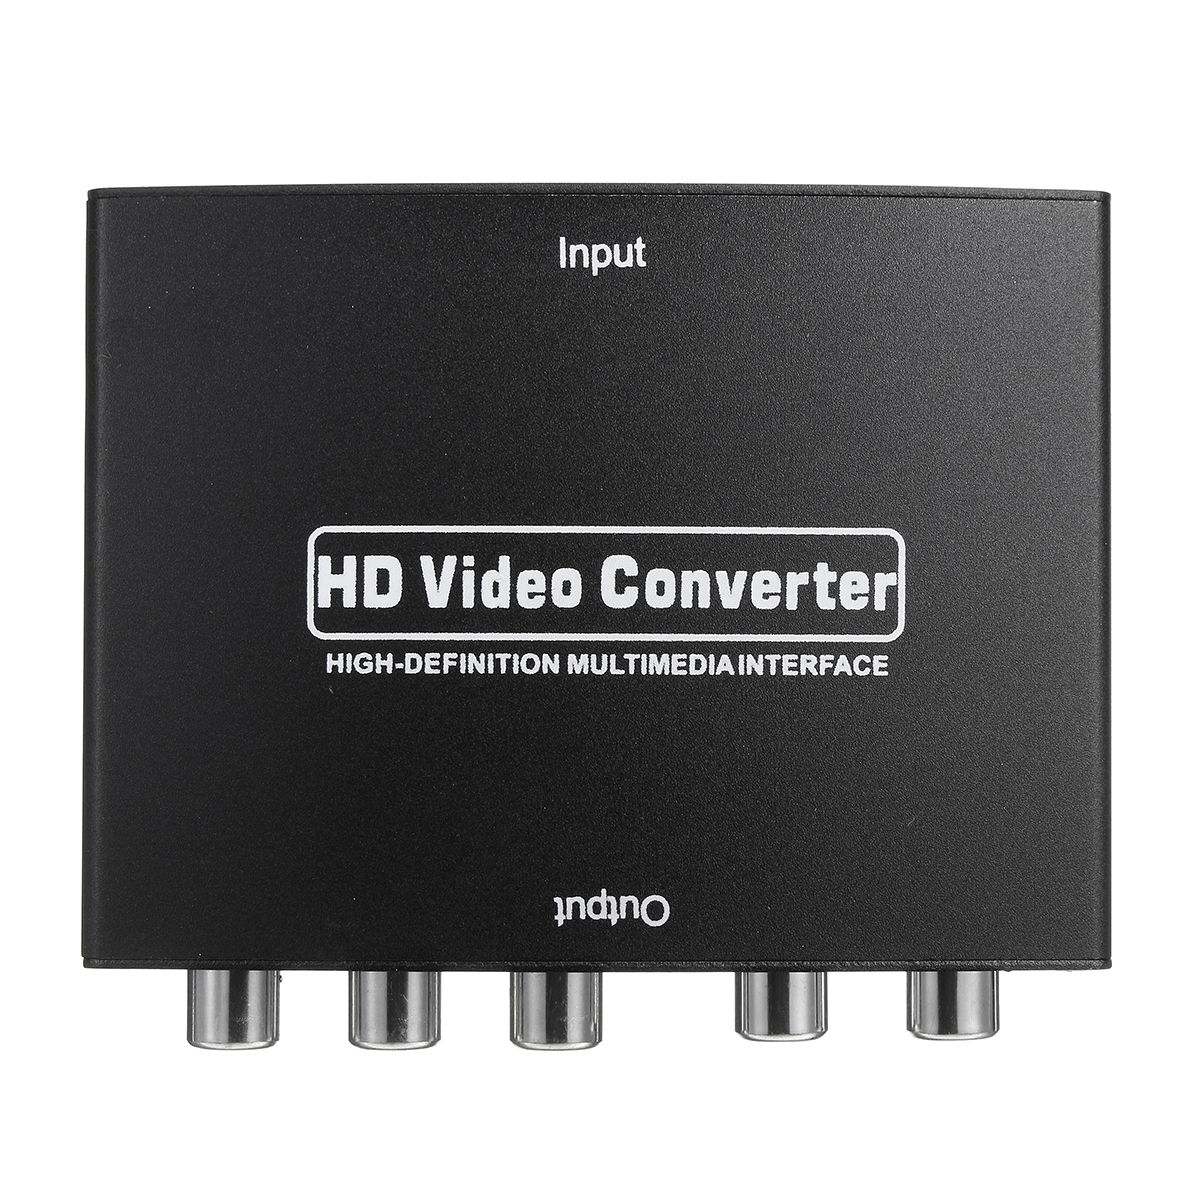 SD-020-1080P-HD-to-RGB-Component-5RCA-YPbPr-Video-RL-Audio-Converter-Adapter-TV-PC-1174112